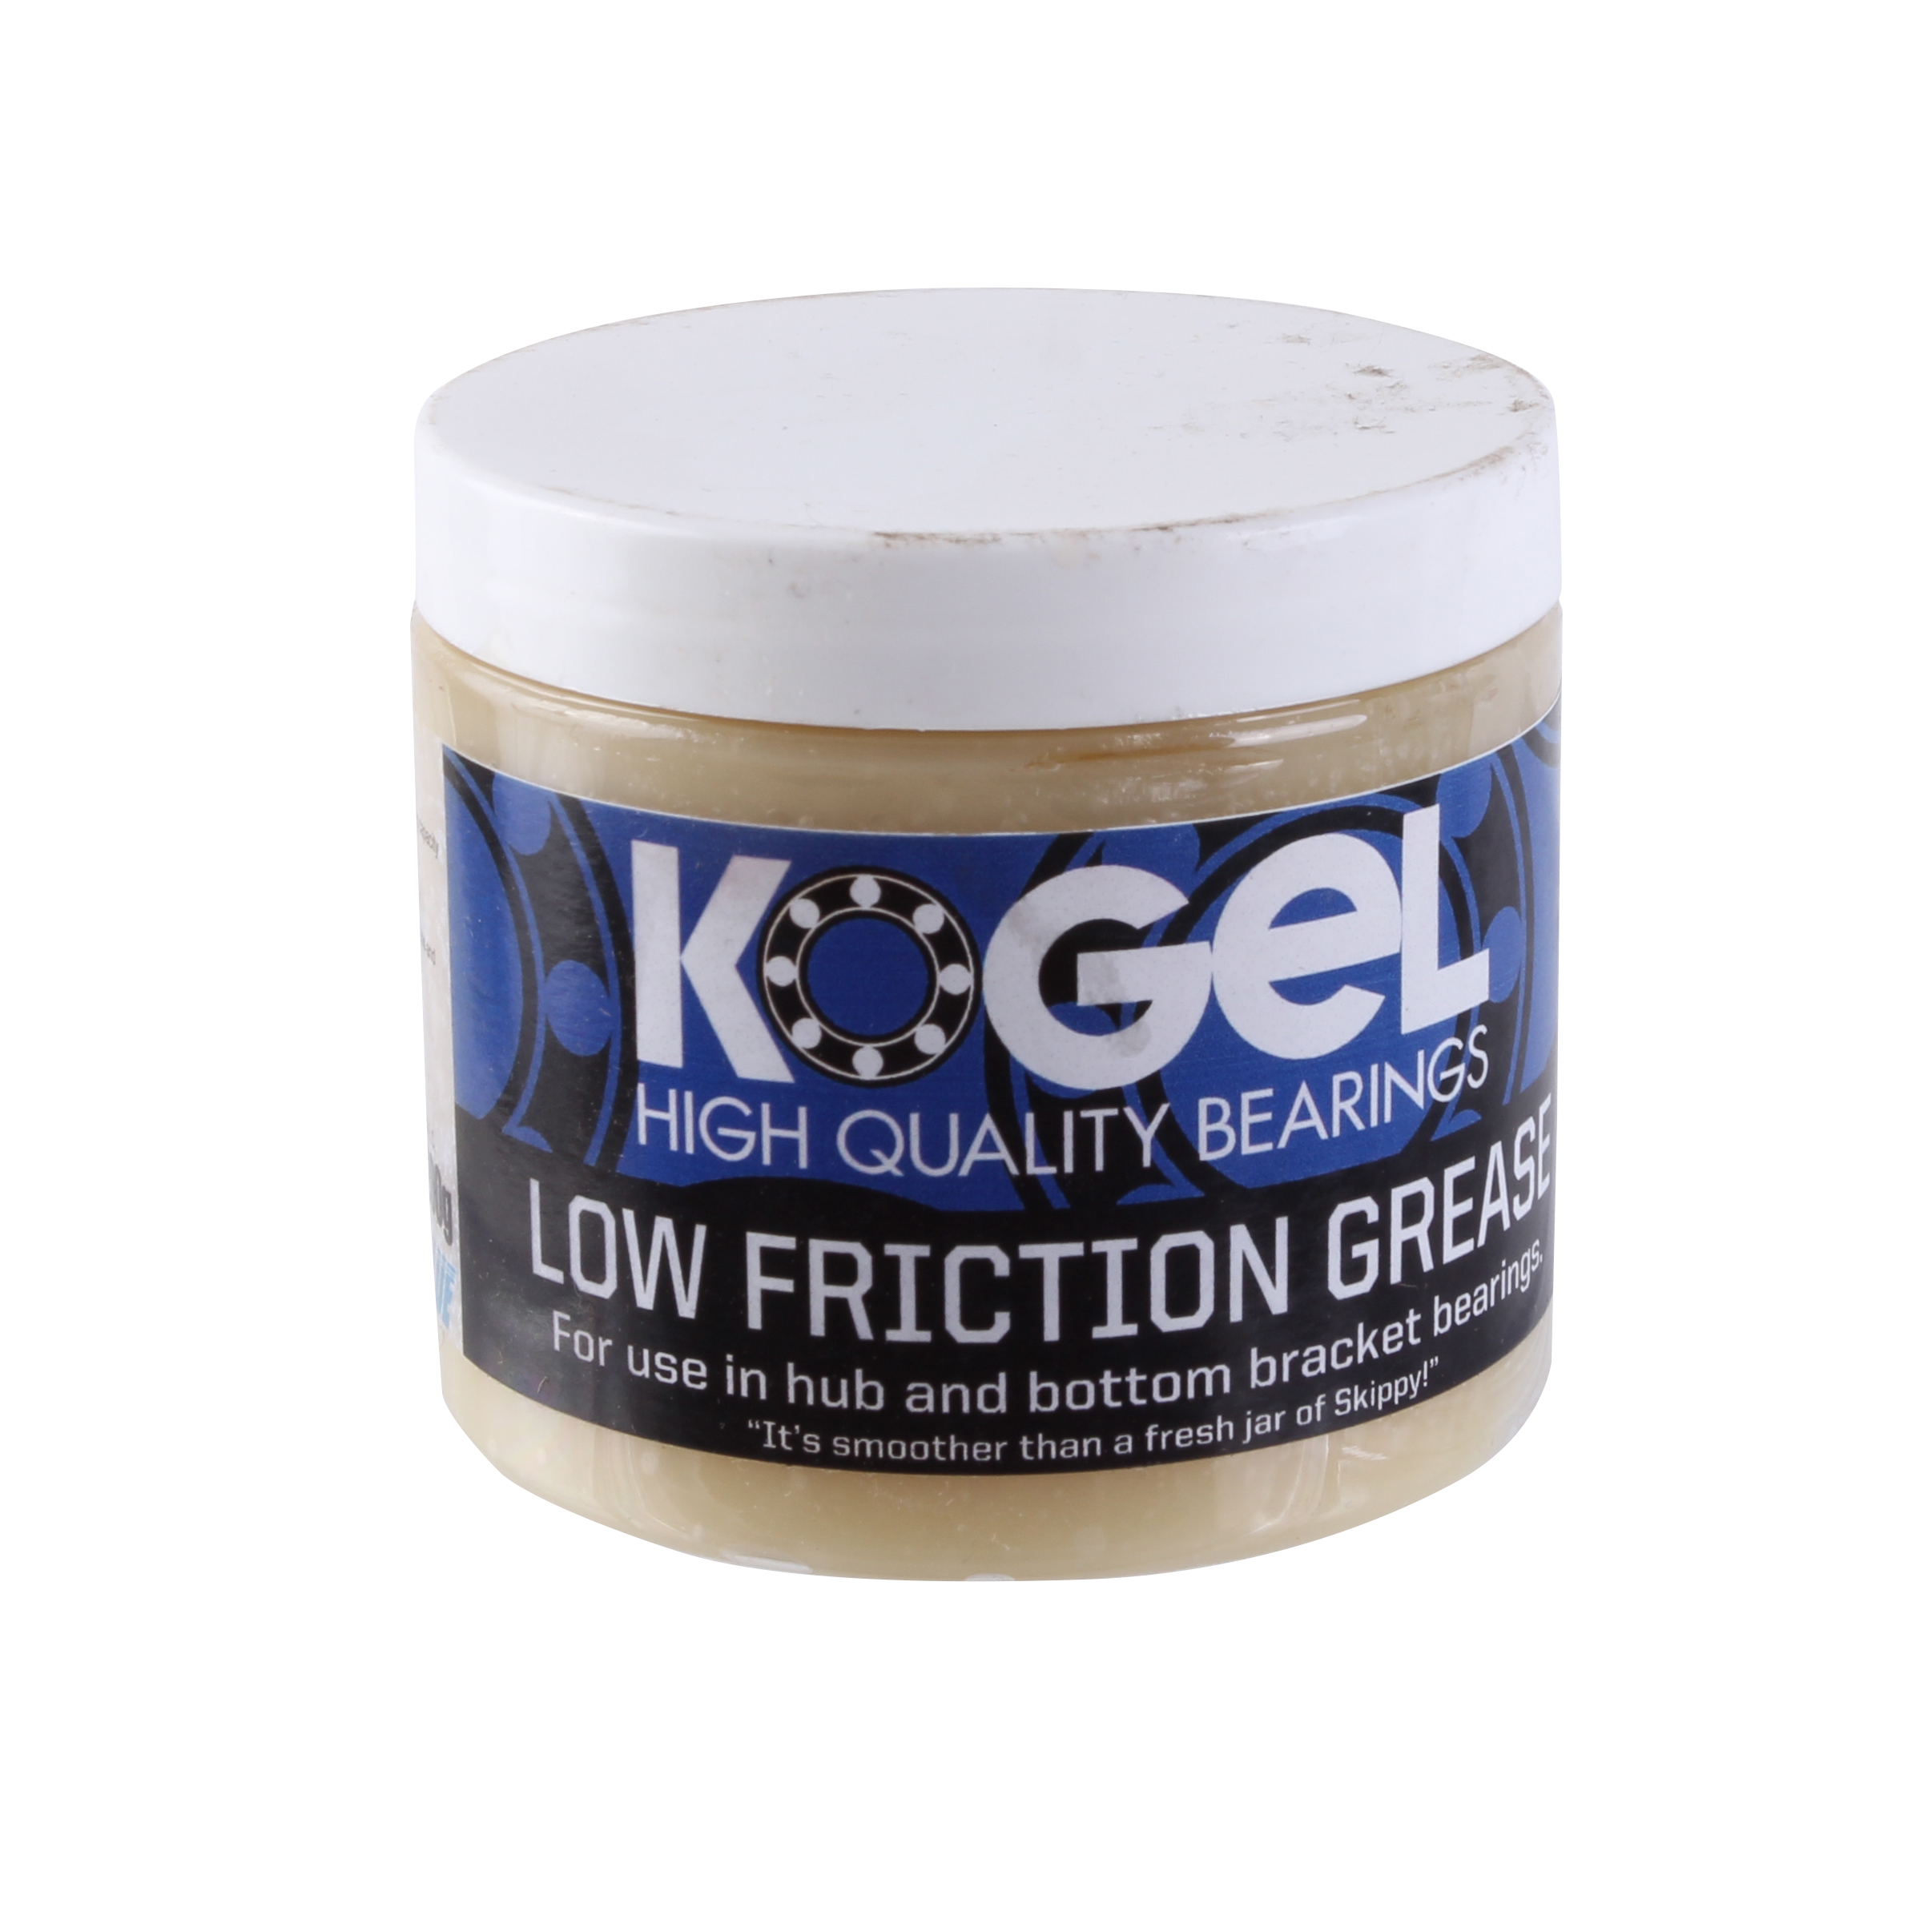 Kogel Bearings Low Friction Grease, 200ml Jar